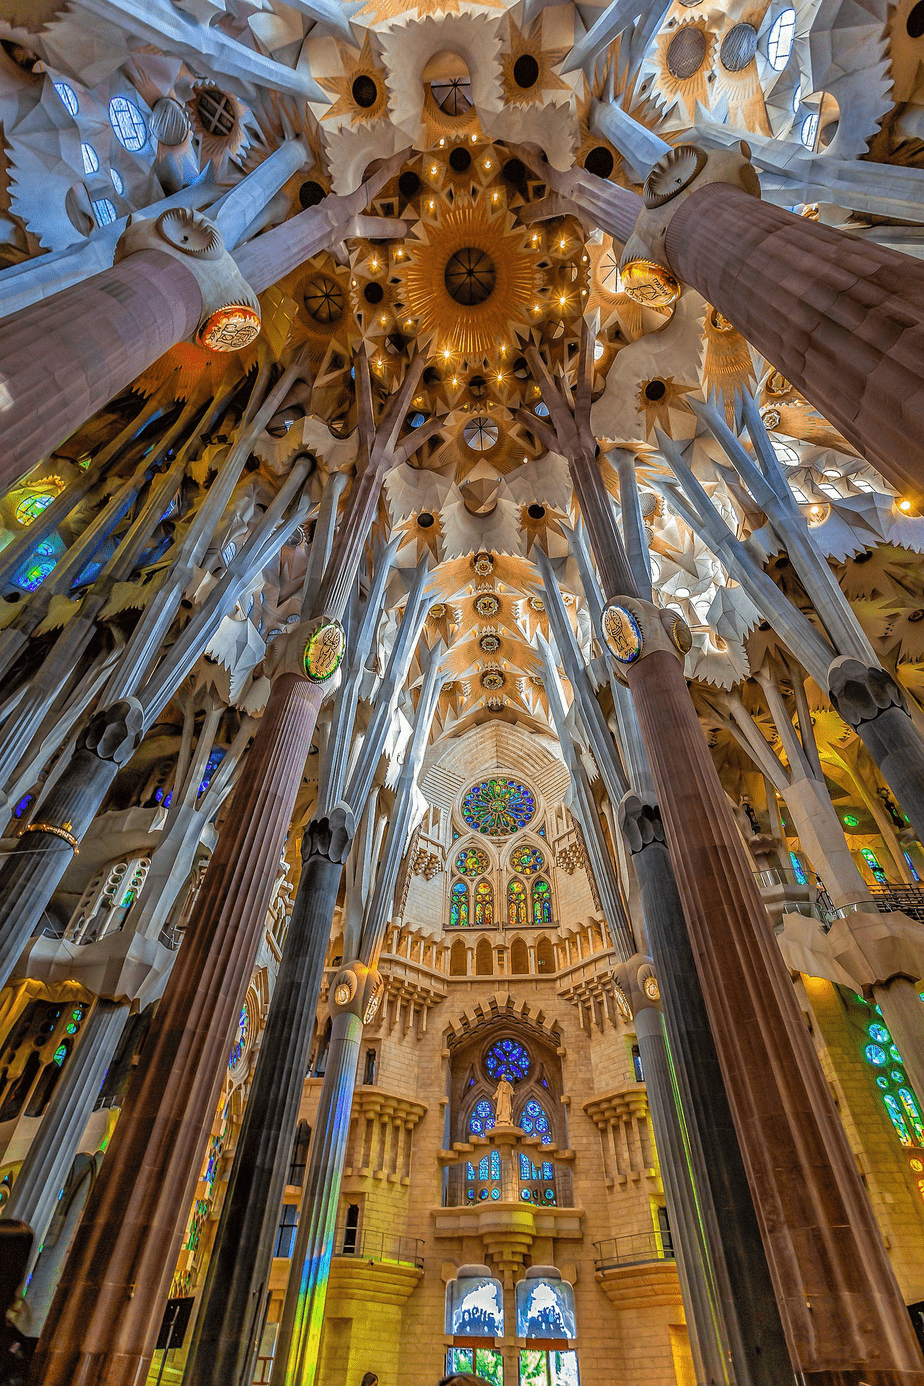 Sagrada Familia by Gaudi - Basilica in Barcelona, Spain - 137 Year Project 70